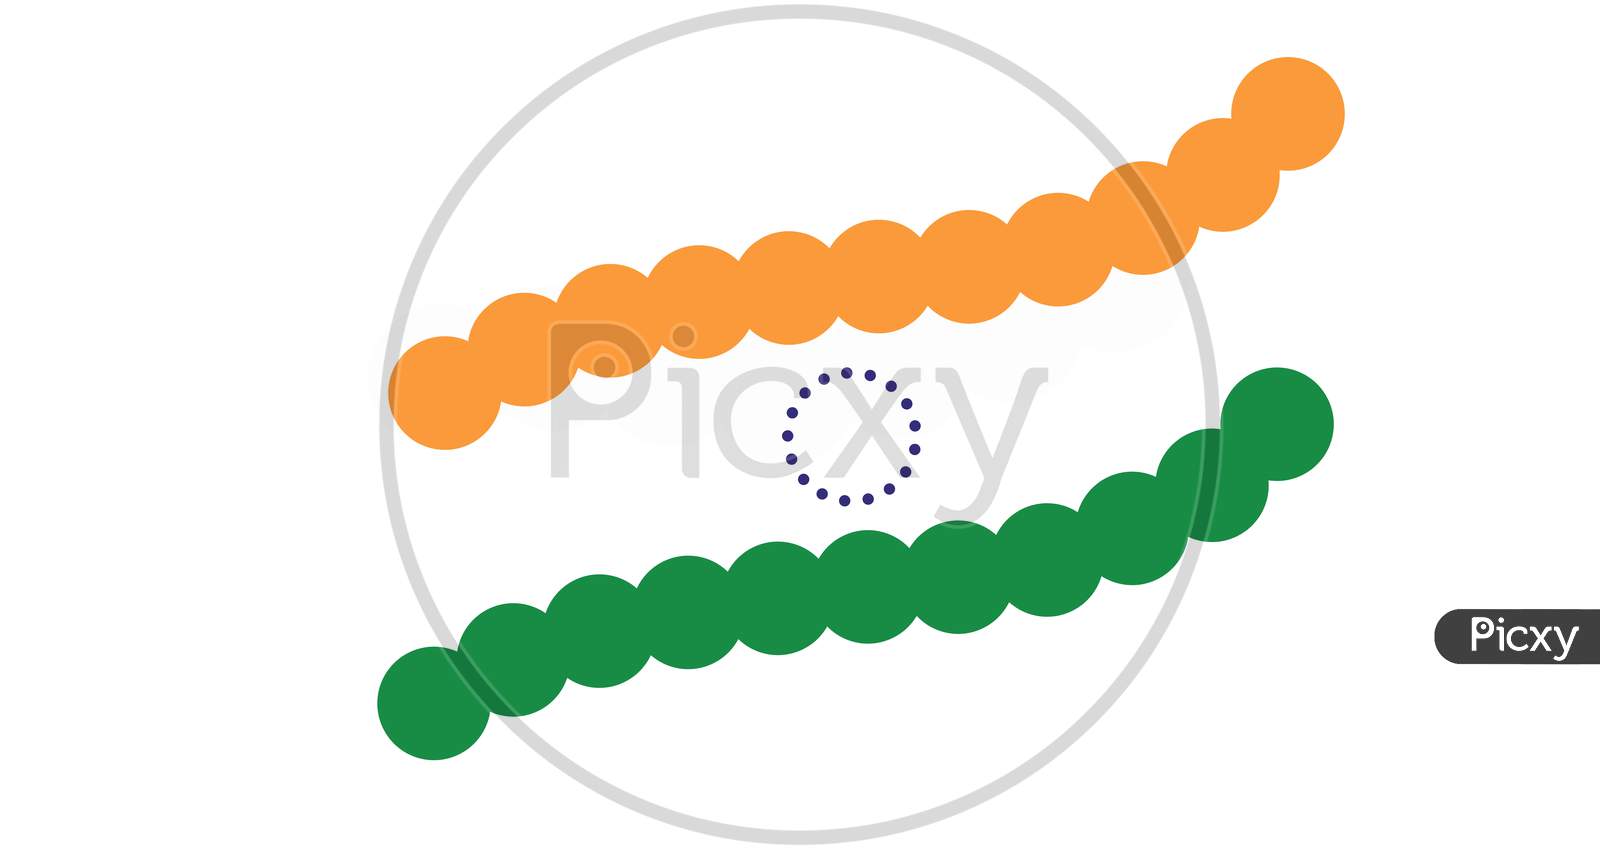 Indian flag.